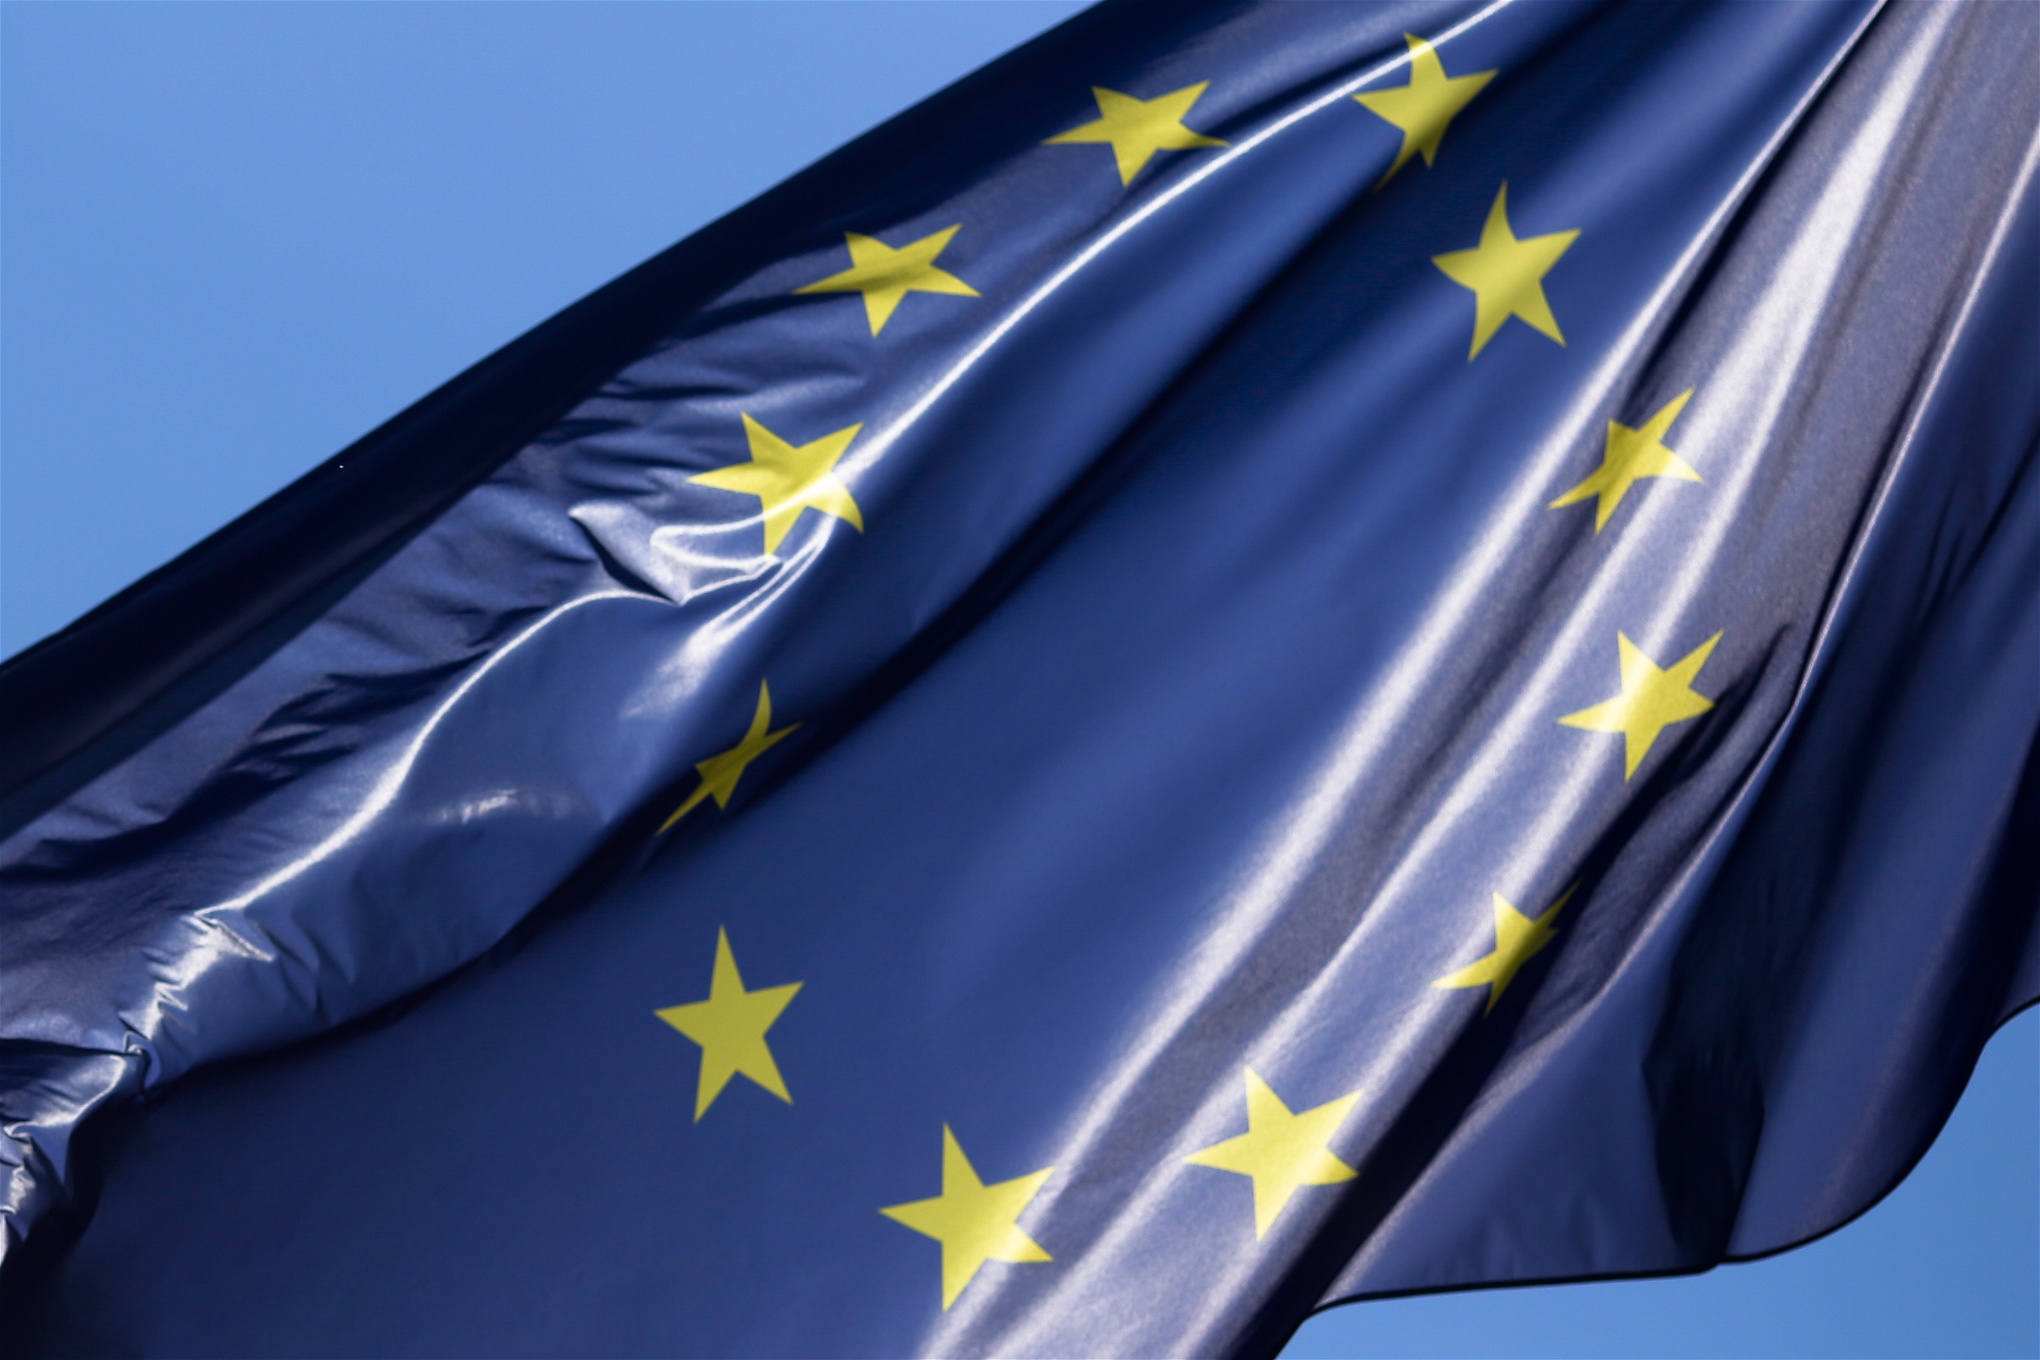 EU:s flagga.